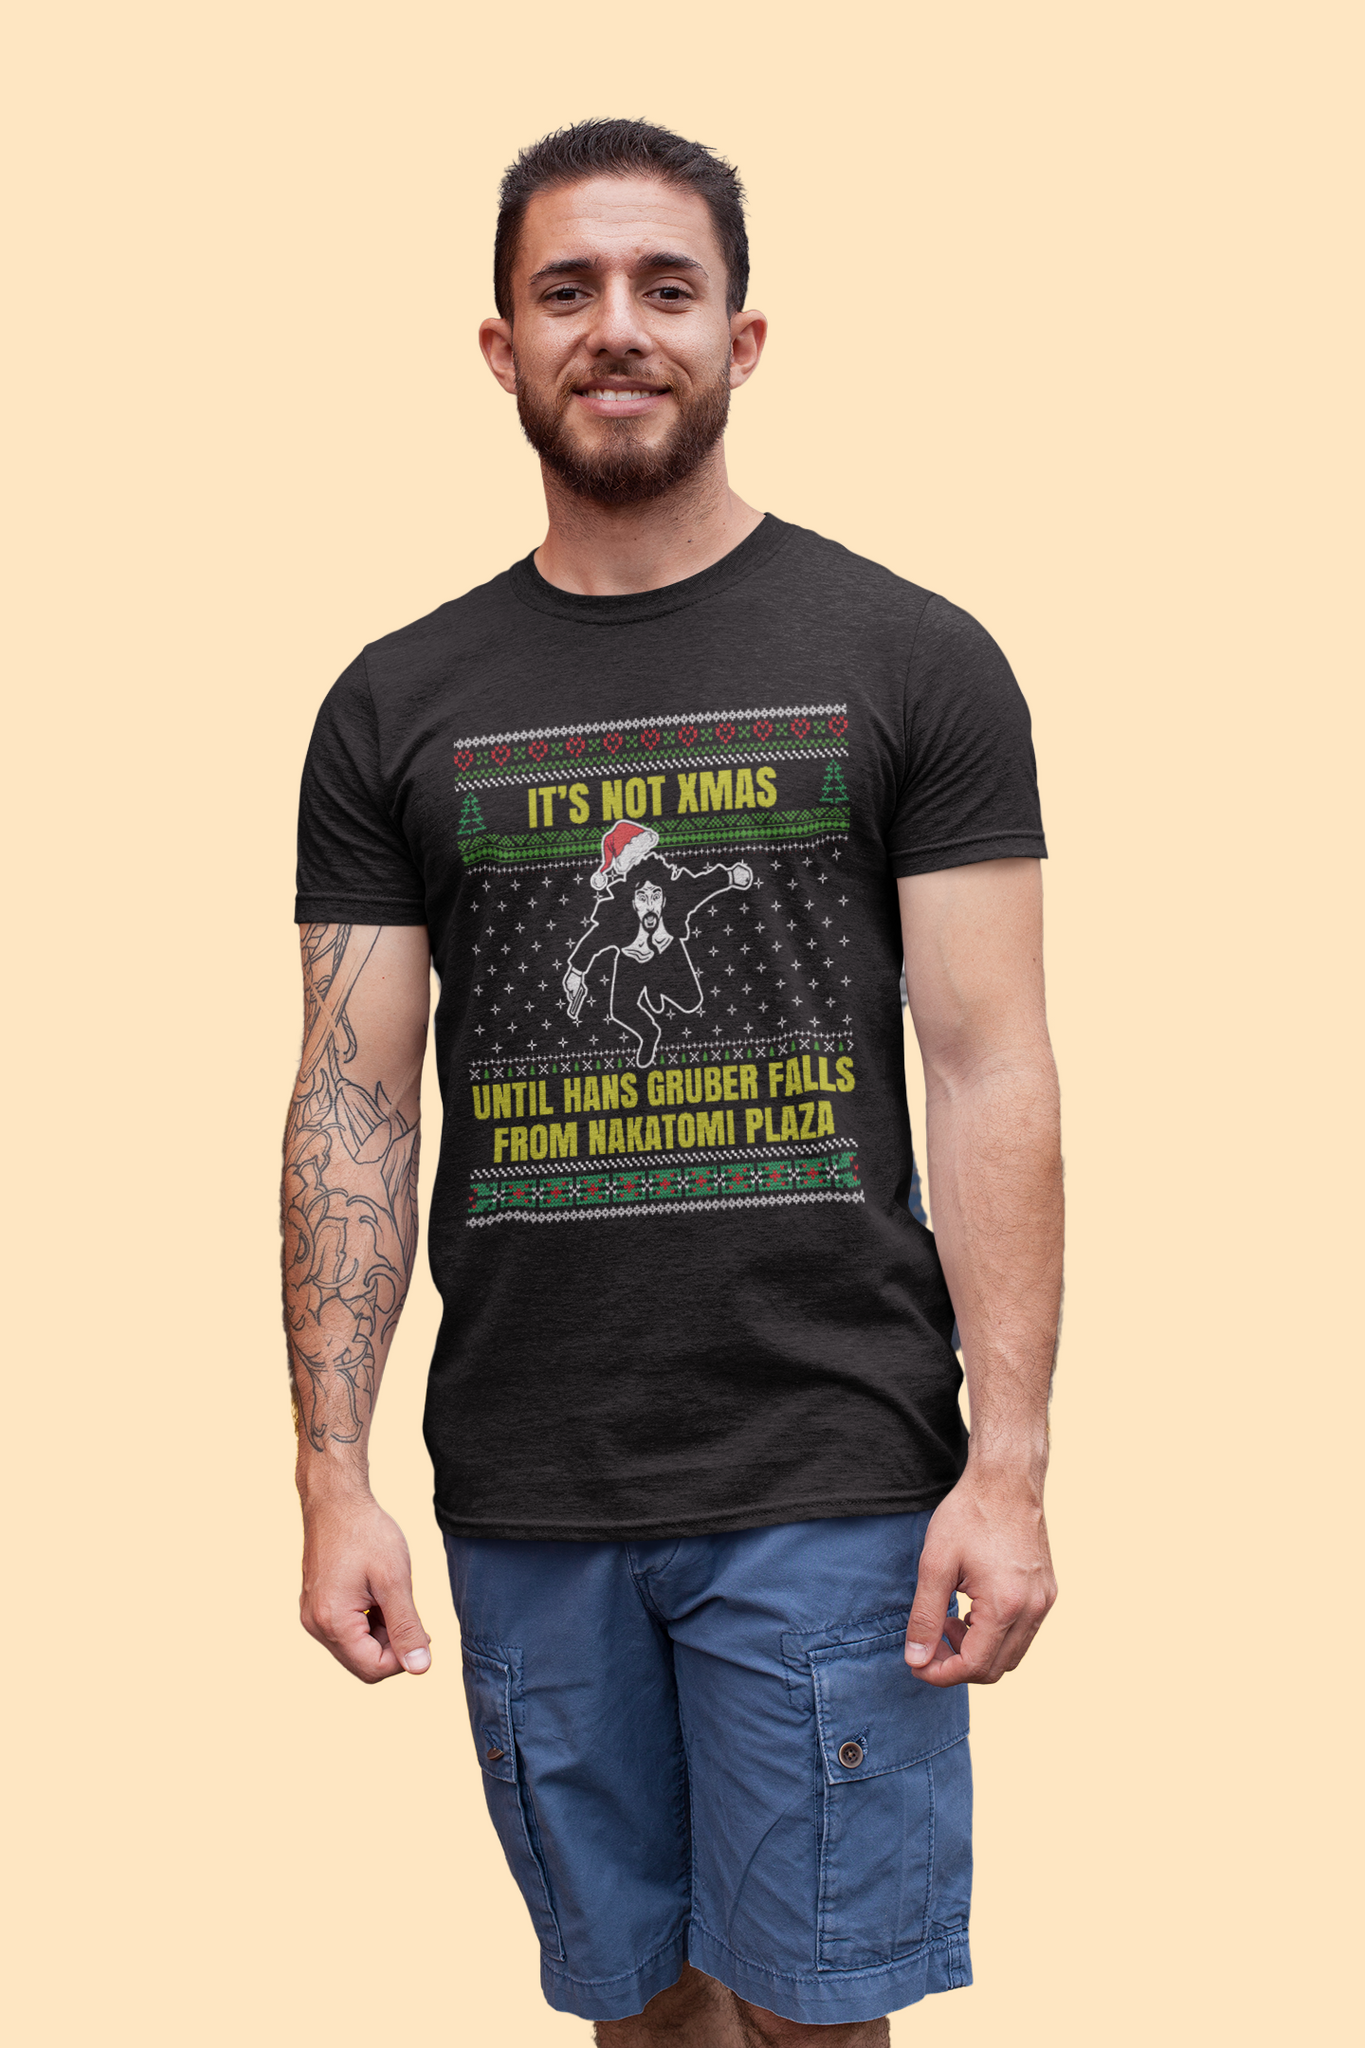 Die Hard Movie T Shirt, Hans Gruber T Shirt, Its Not Xmas Until Hans Gruber Falls From Nakatomi Plaza Tshirt, Xmas Gift